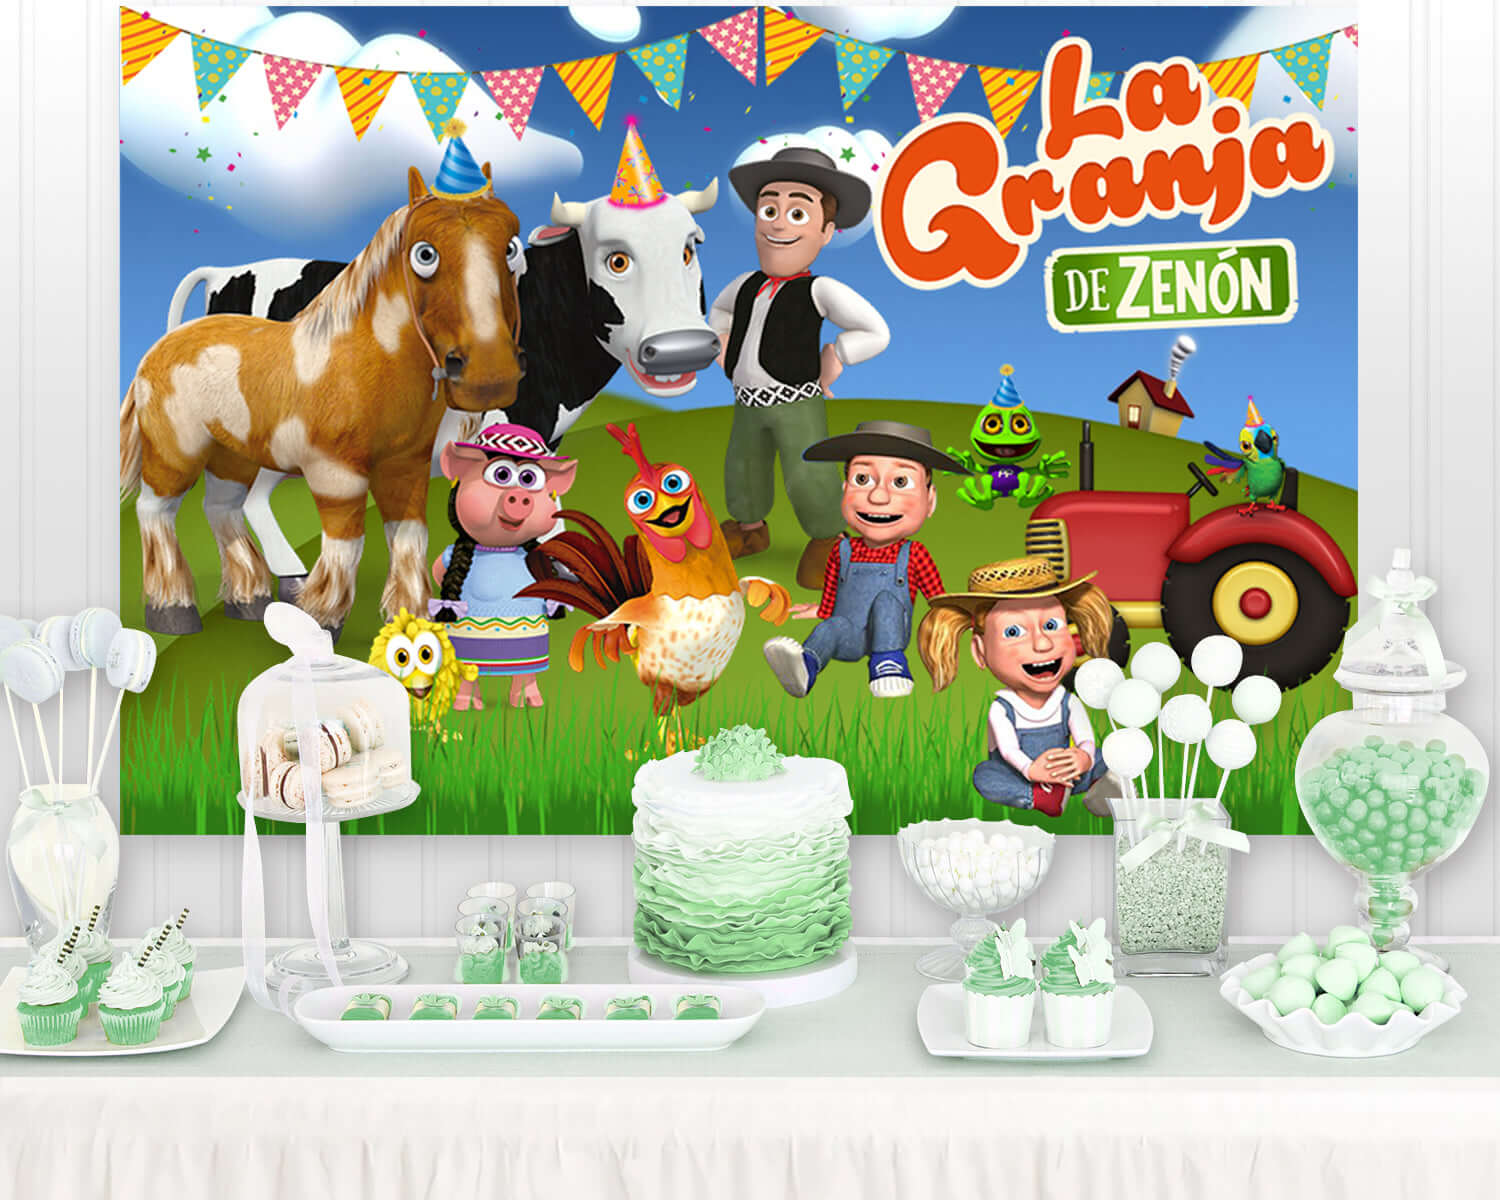 La Granja De Zenon Photo Backdrop Animal Farm Baby Shower Happy Birthday  Party Kids Photograph Background Banner Decoration